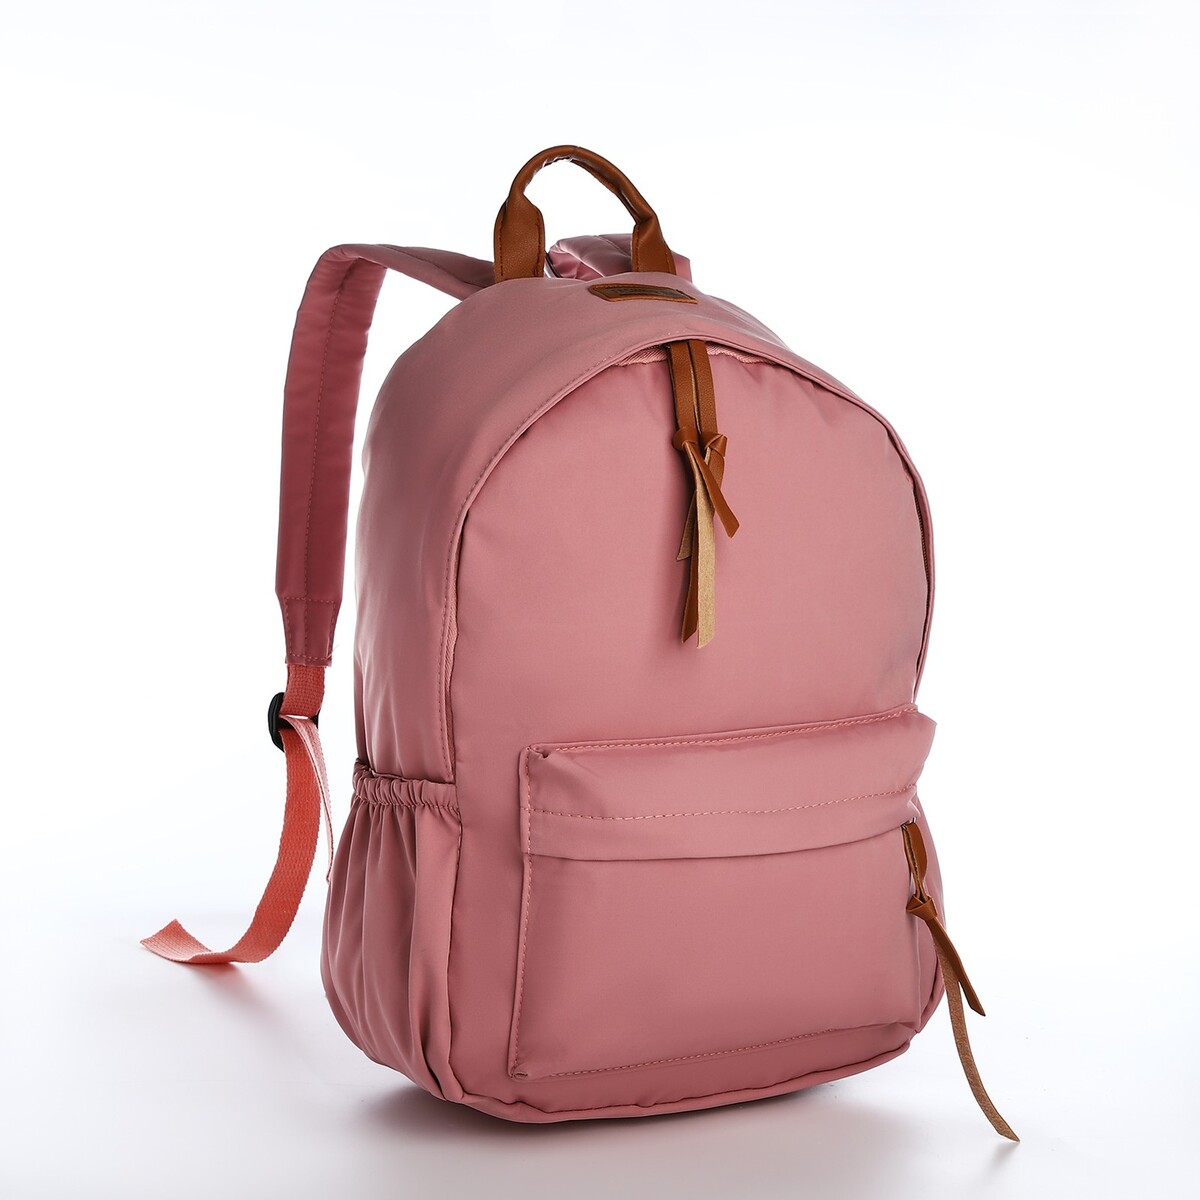 Рюкзак молодежный из текстиля на молнии, 4 кармана, цвет розовый рюкзак молодежный из текстиля на молнии 2 кармана розовый